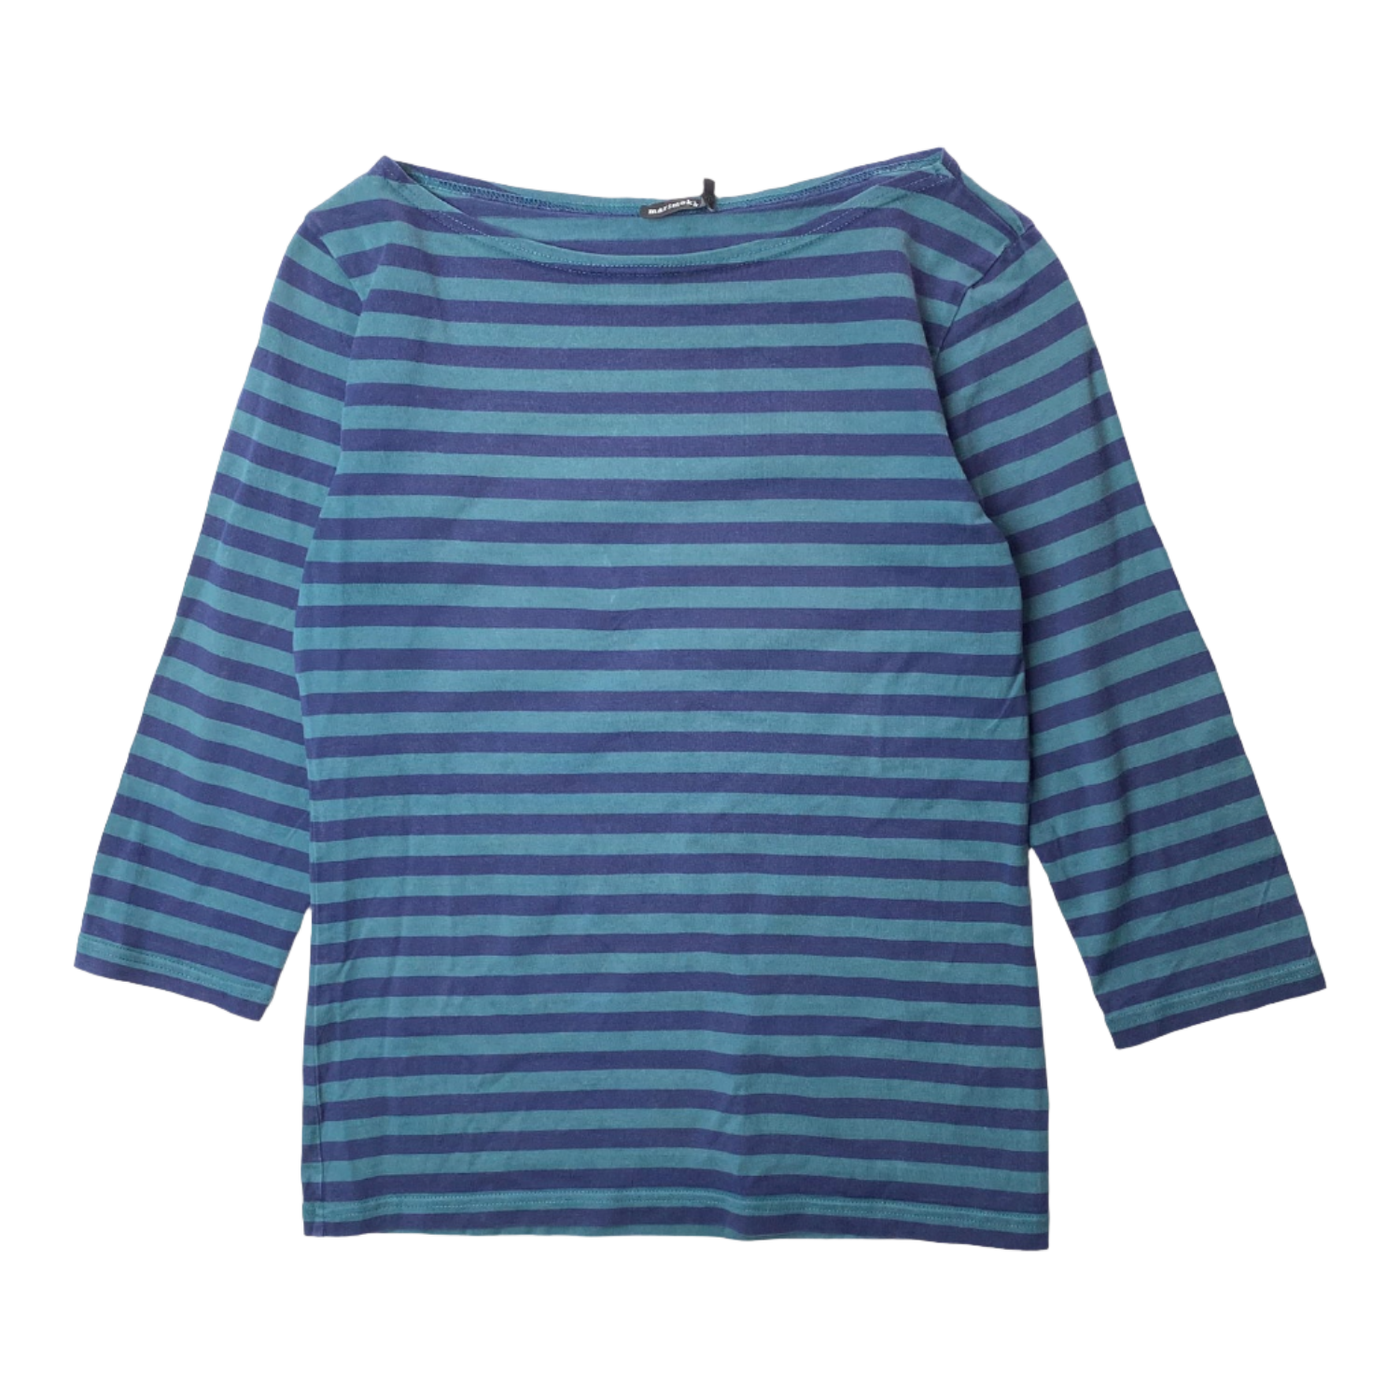 Marimekko ilma shirt, stripes | woman XS